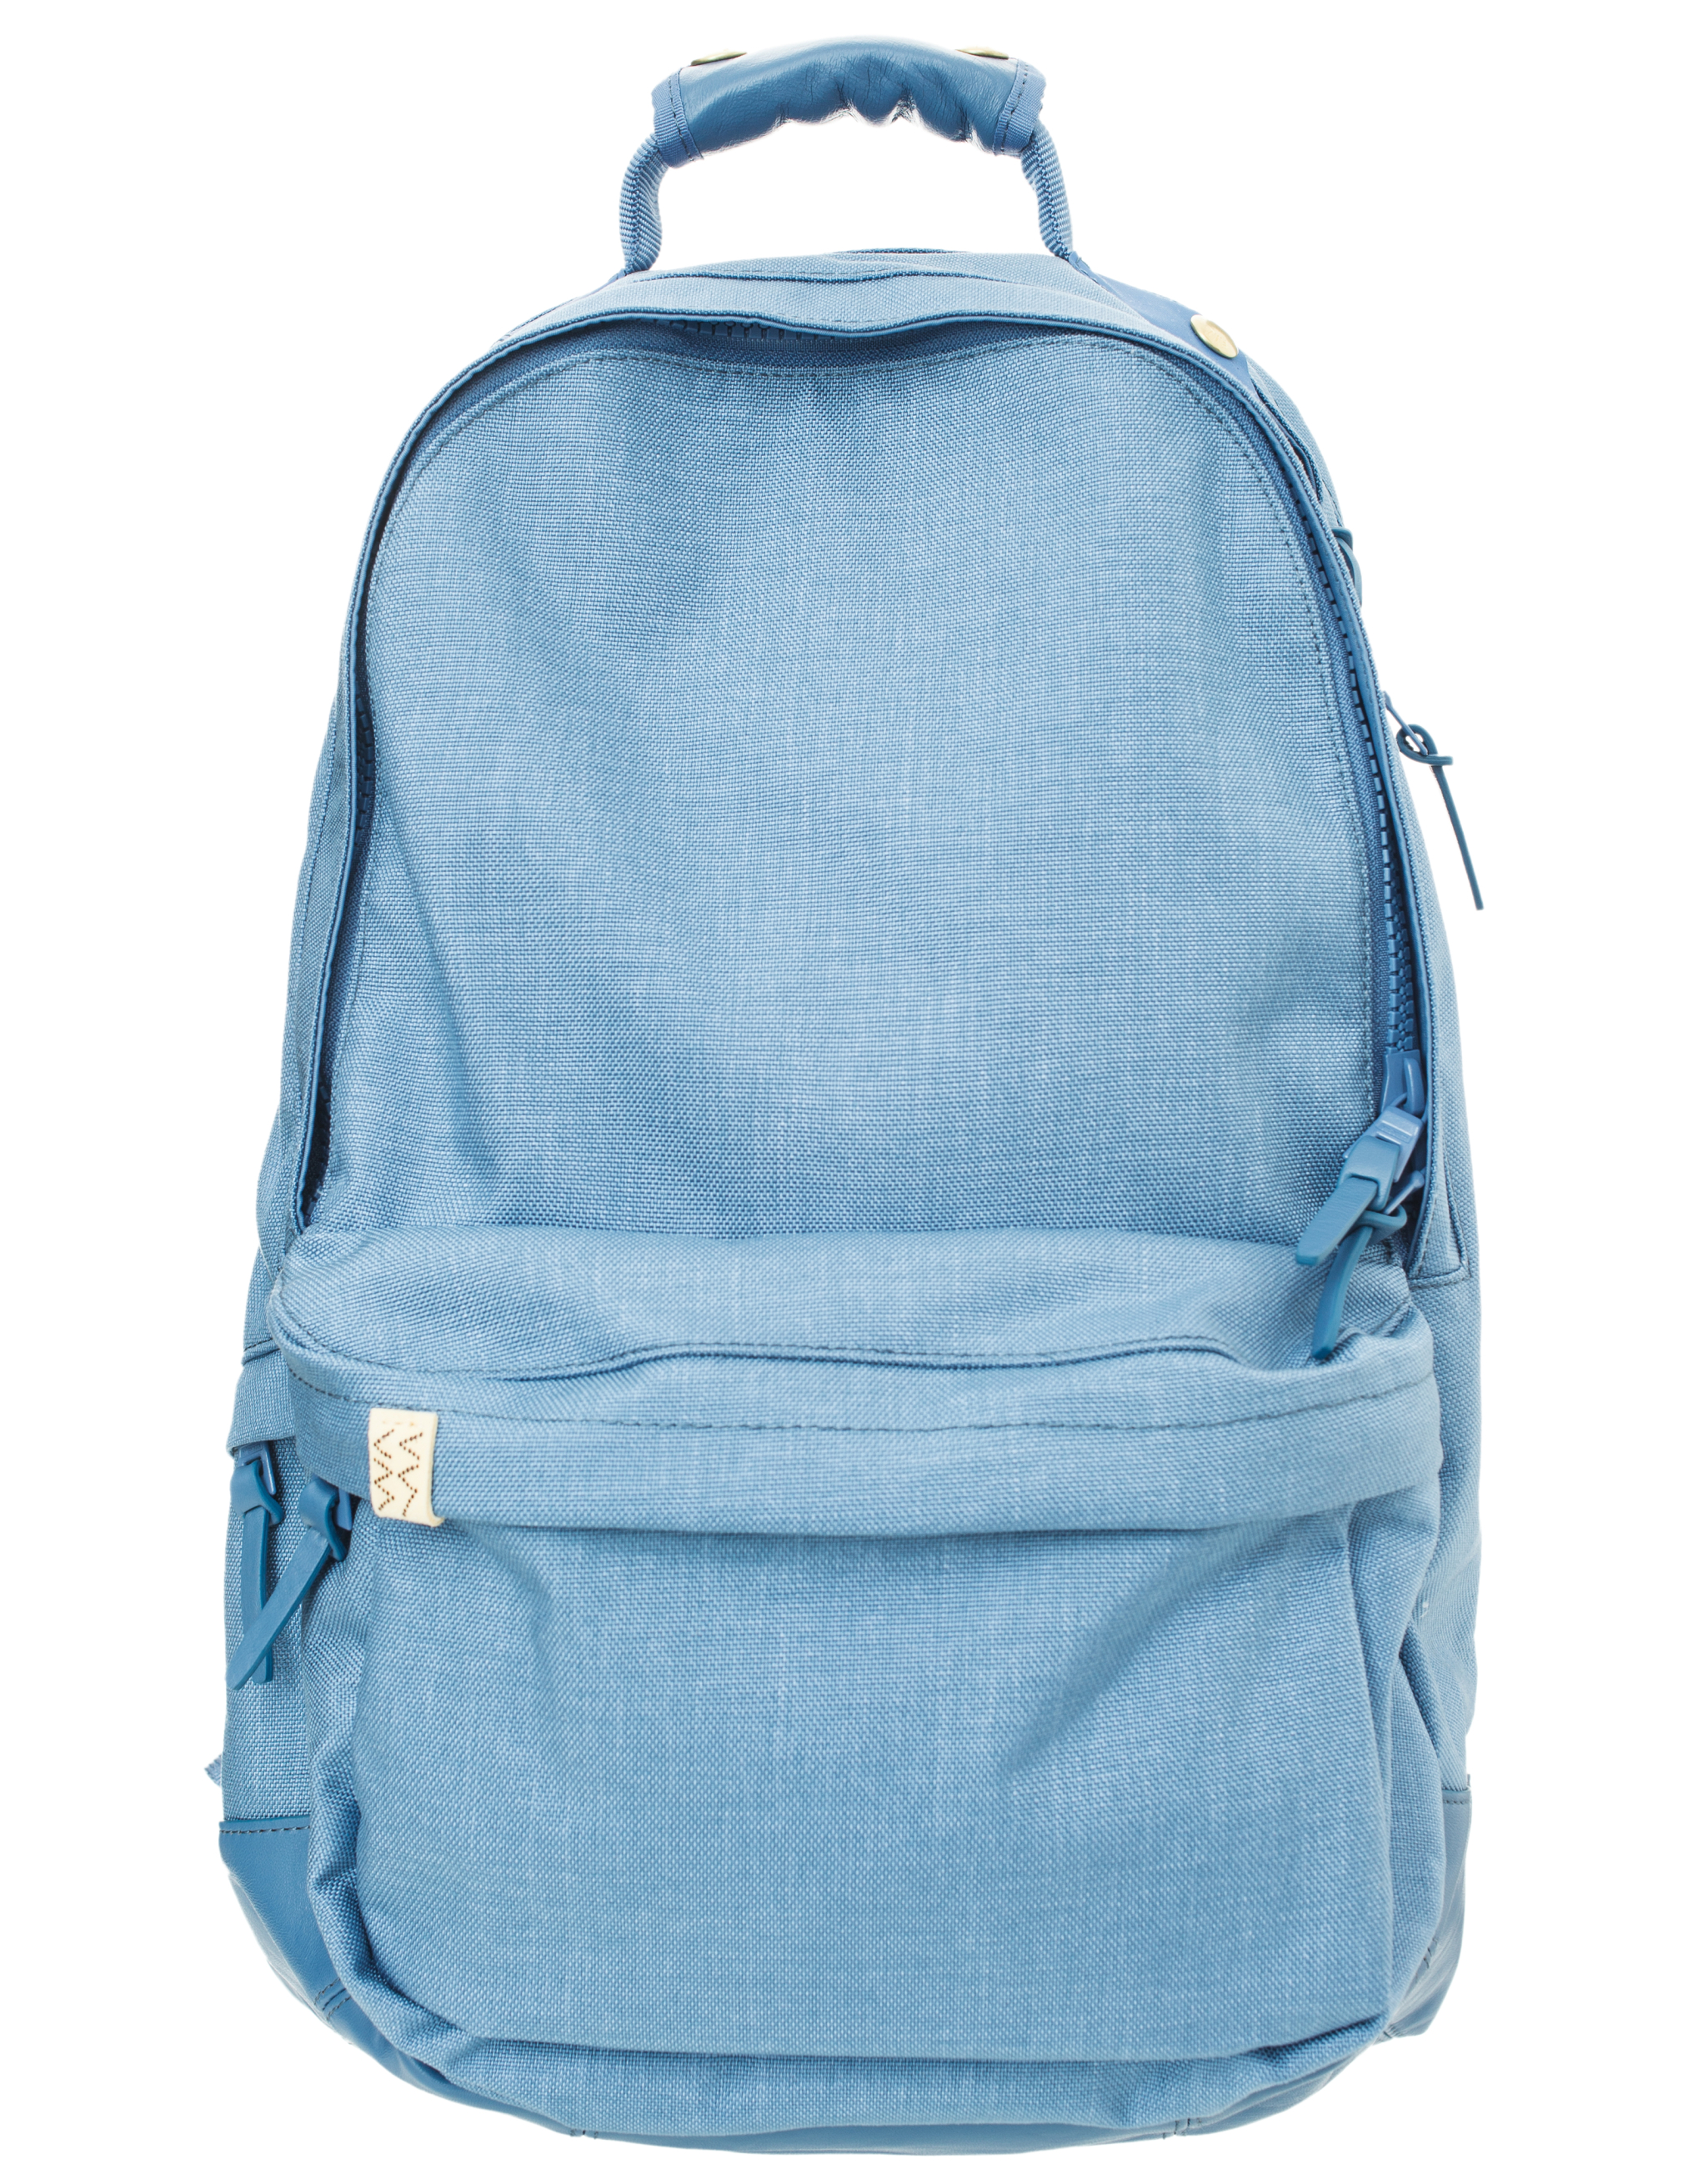 Синий рюкзак Cordura 22L visvim 0123103003032/BLUE, размер One Size 0123103003032/BLUE - фото 1